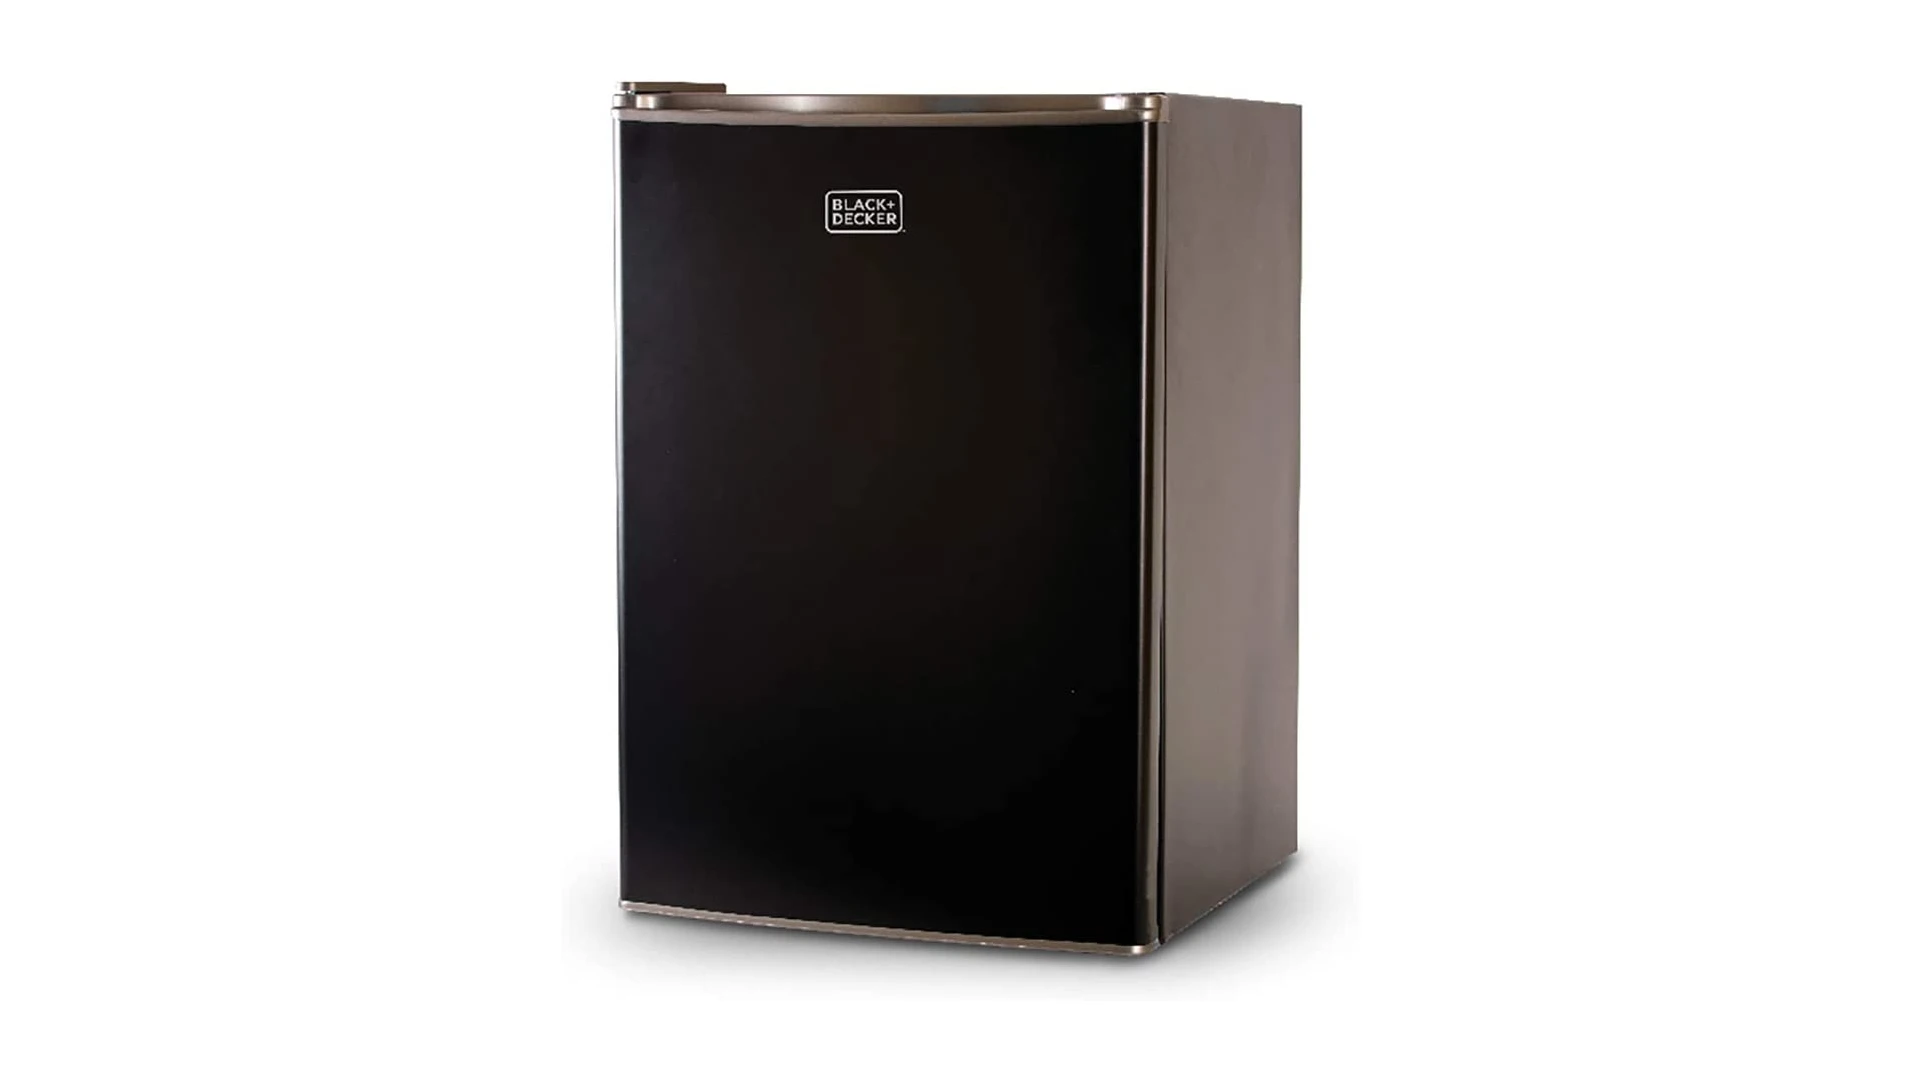 The Refrigerator by BLACK+DECKER